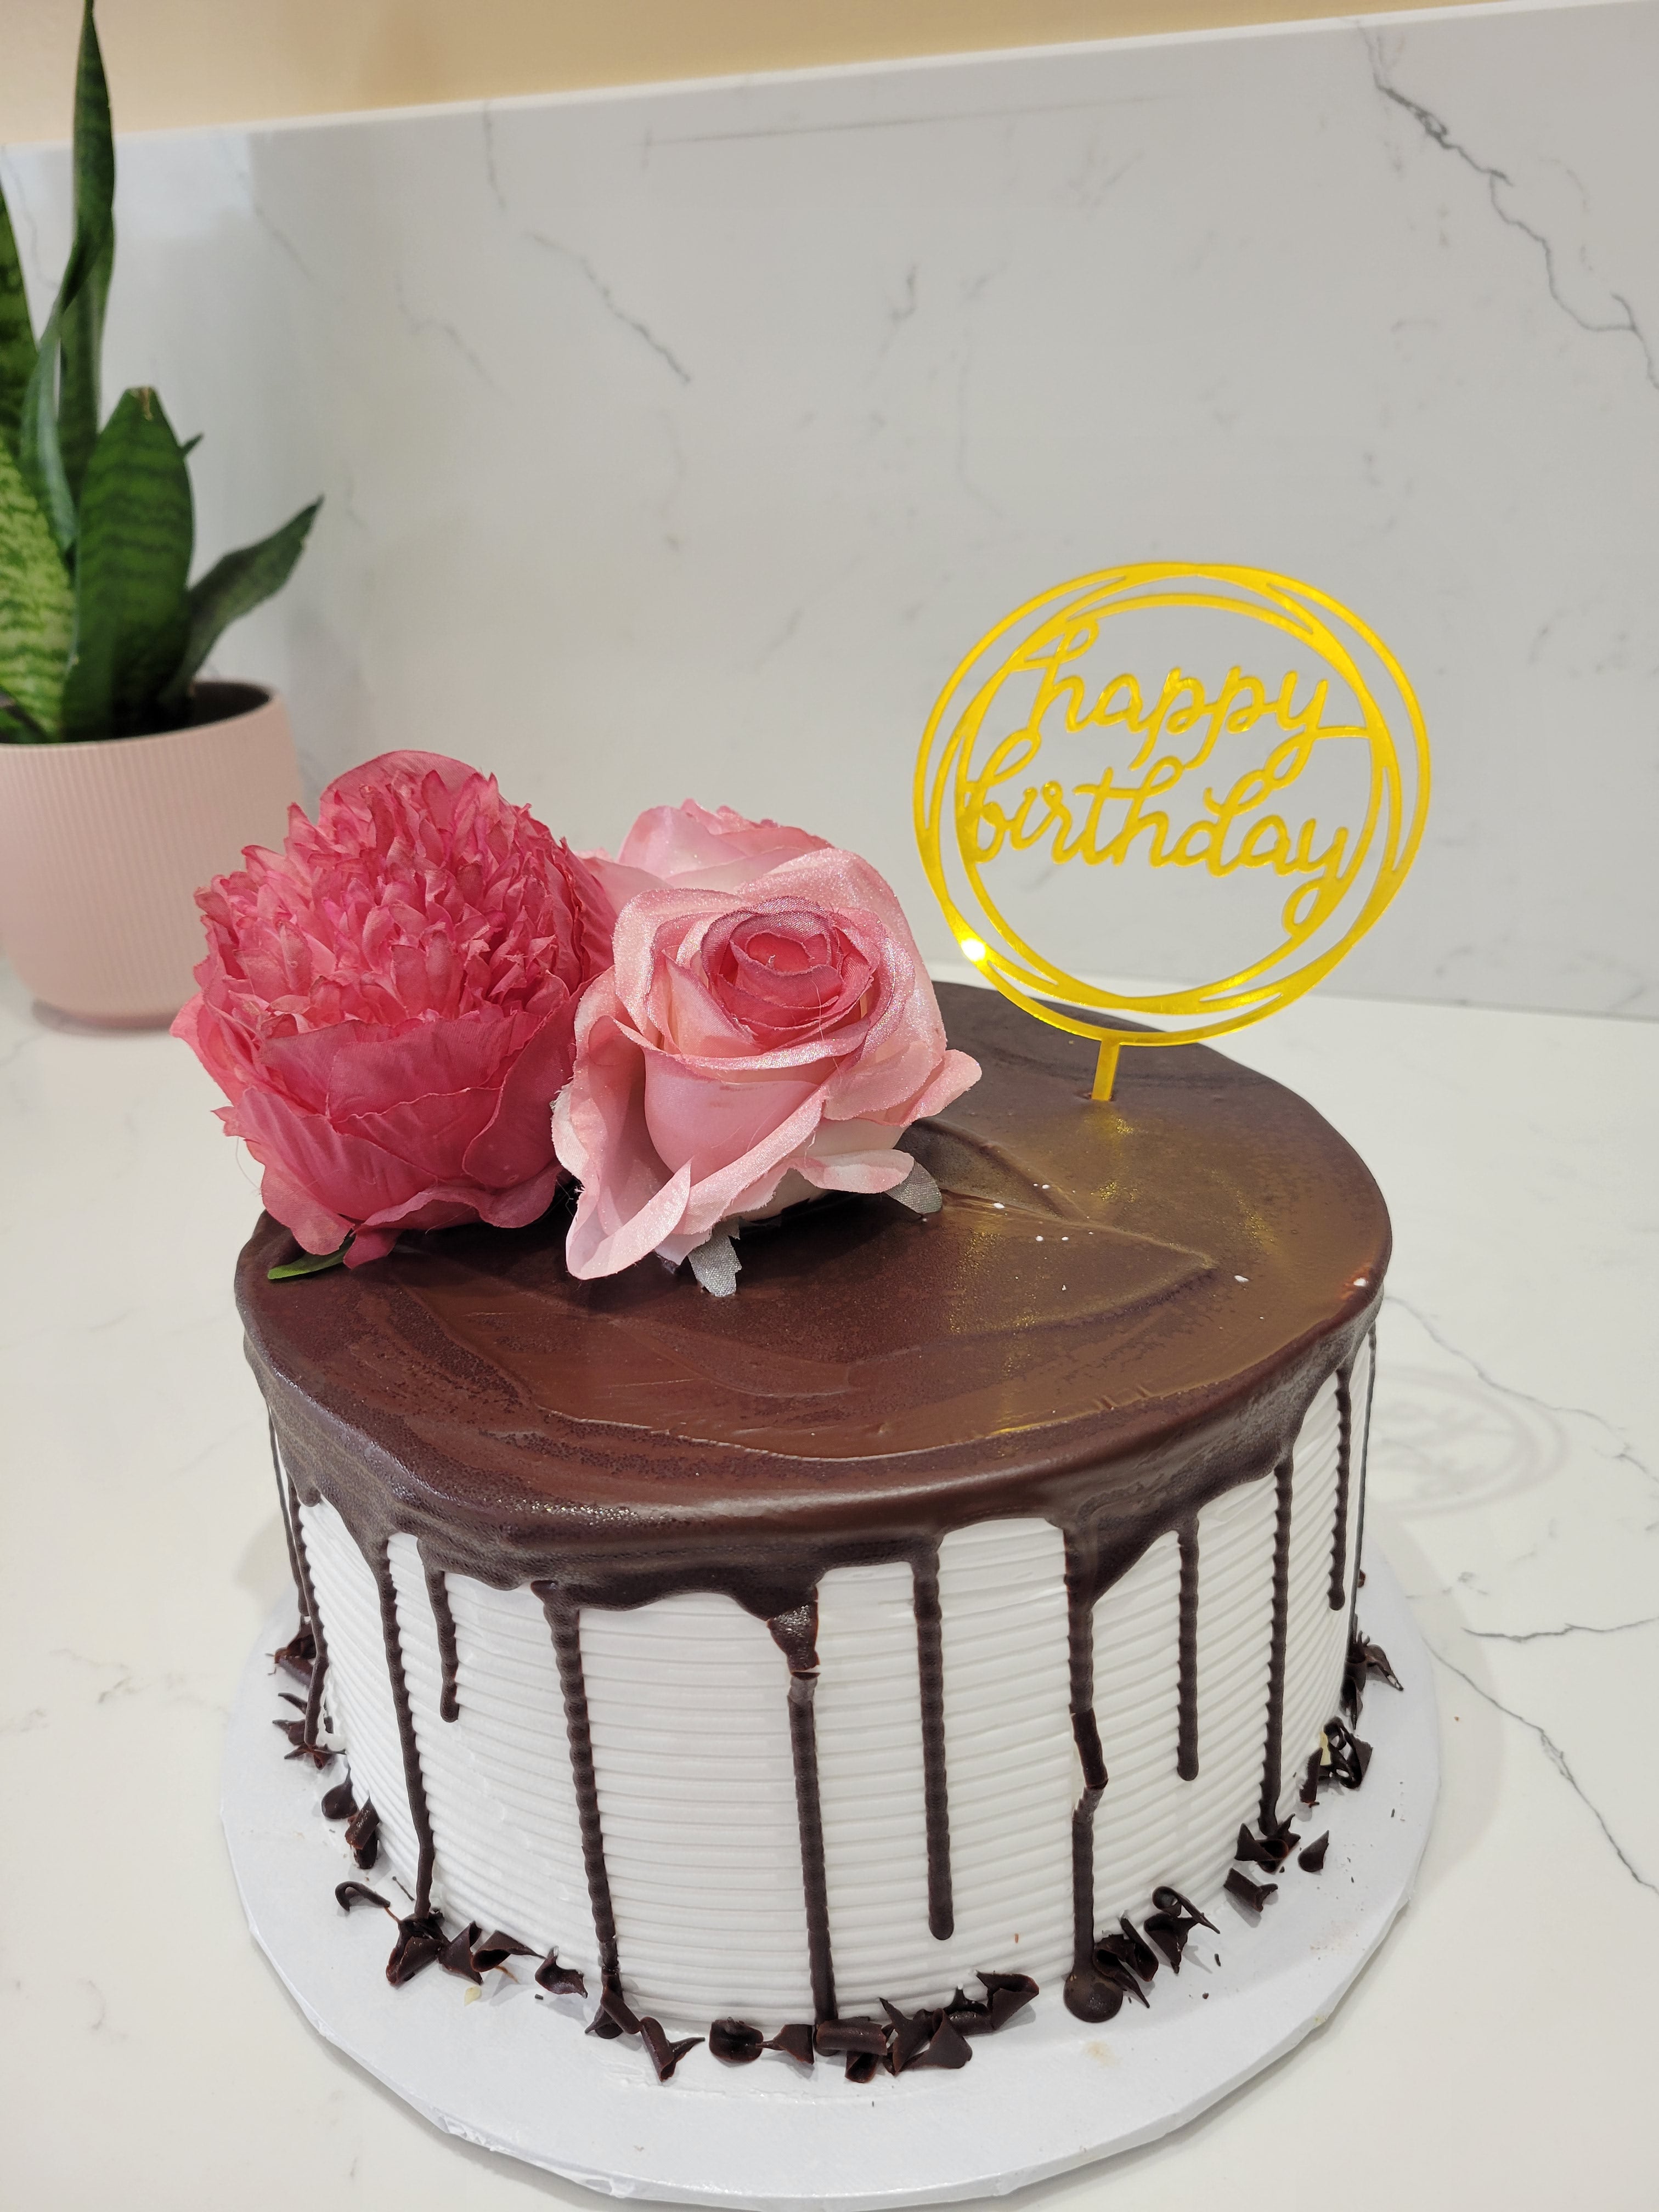 Arshi Happy Birthday Cakes Pics Gallery